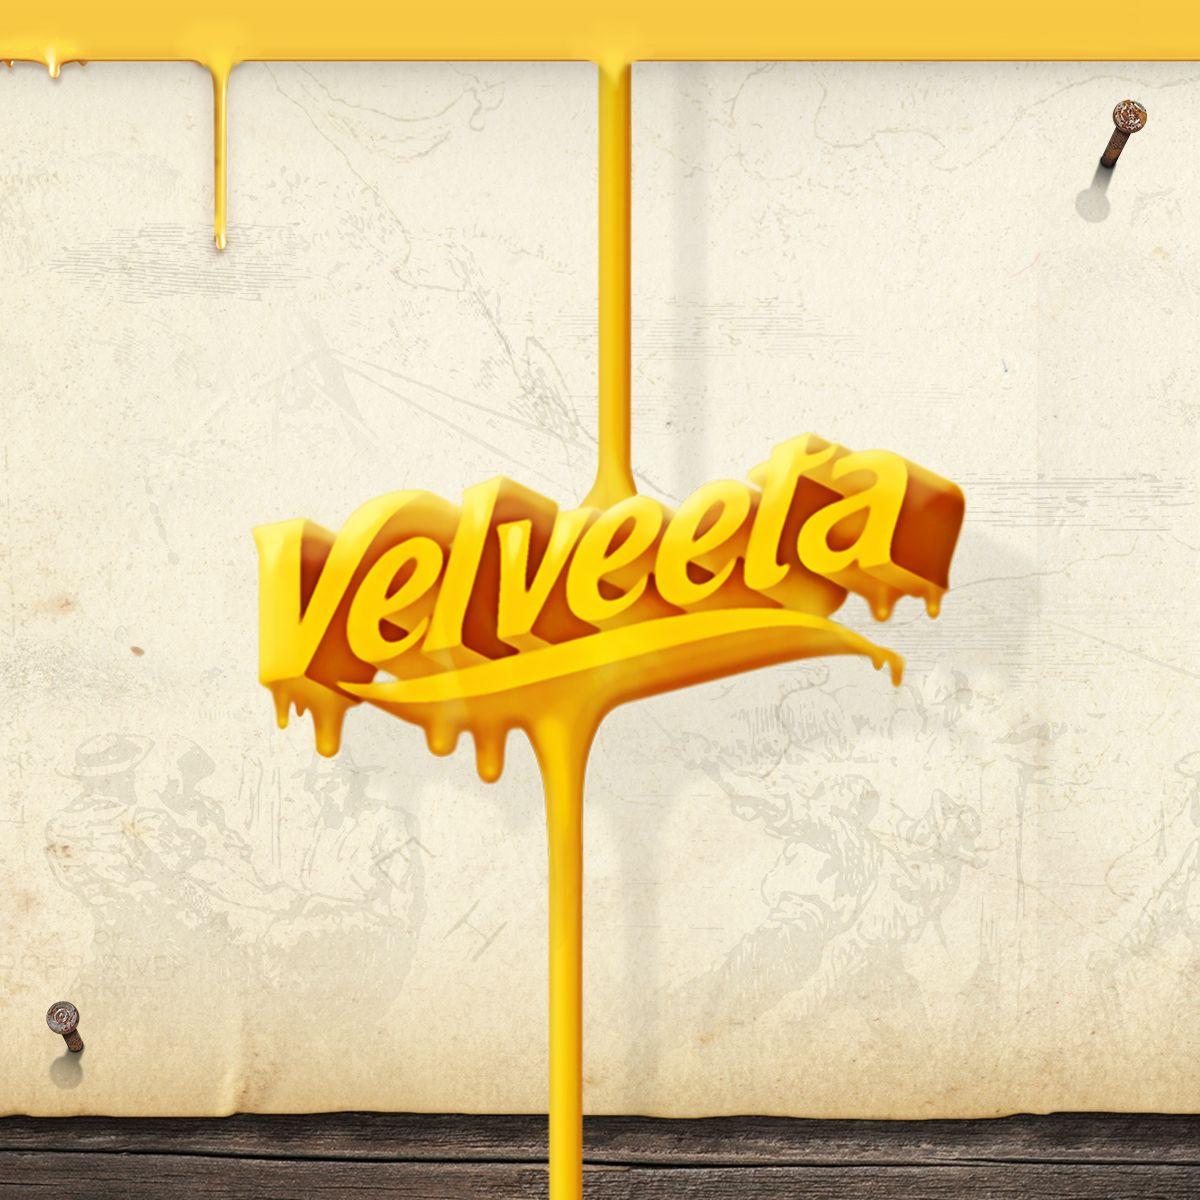 Velveeta Logo - Velveeta - Republic of Liquid Gold ™